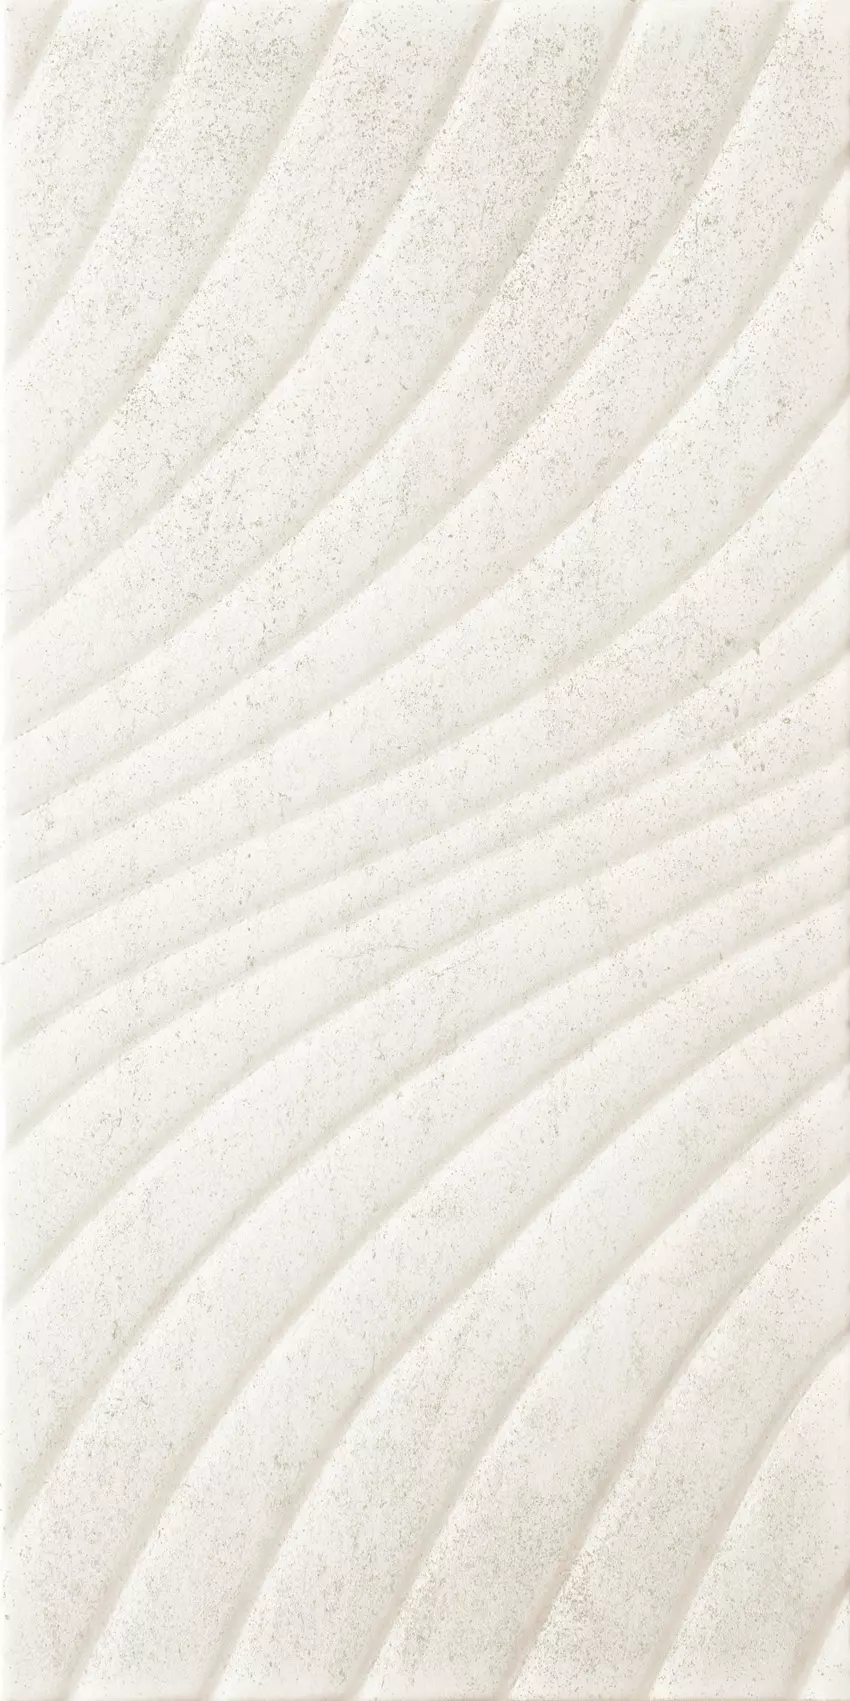 EMILLY Bianco Sturktura falburkoló 30x60x0,9 cm